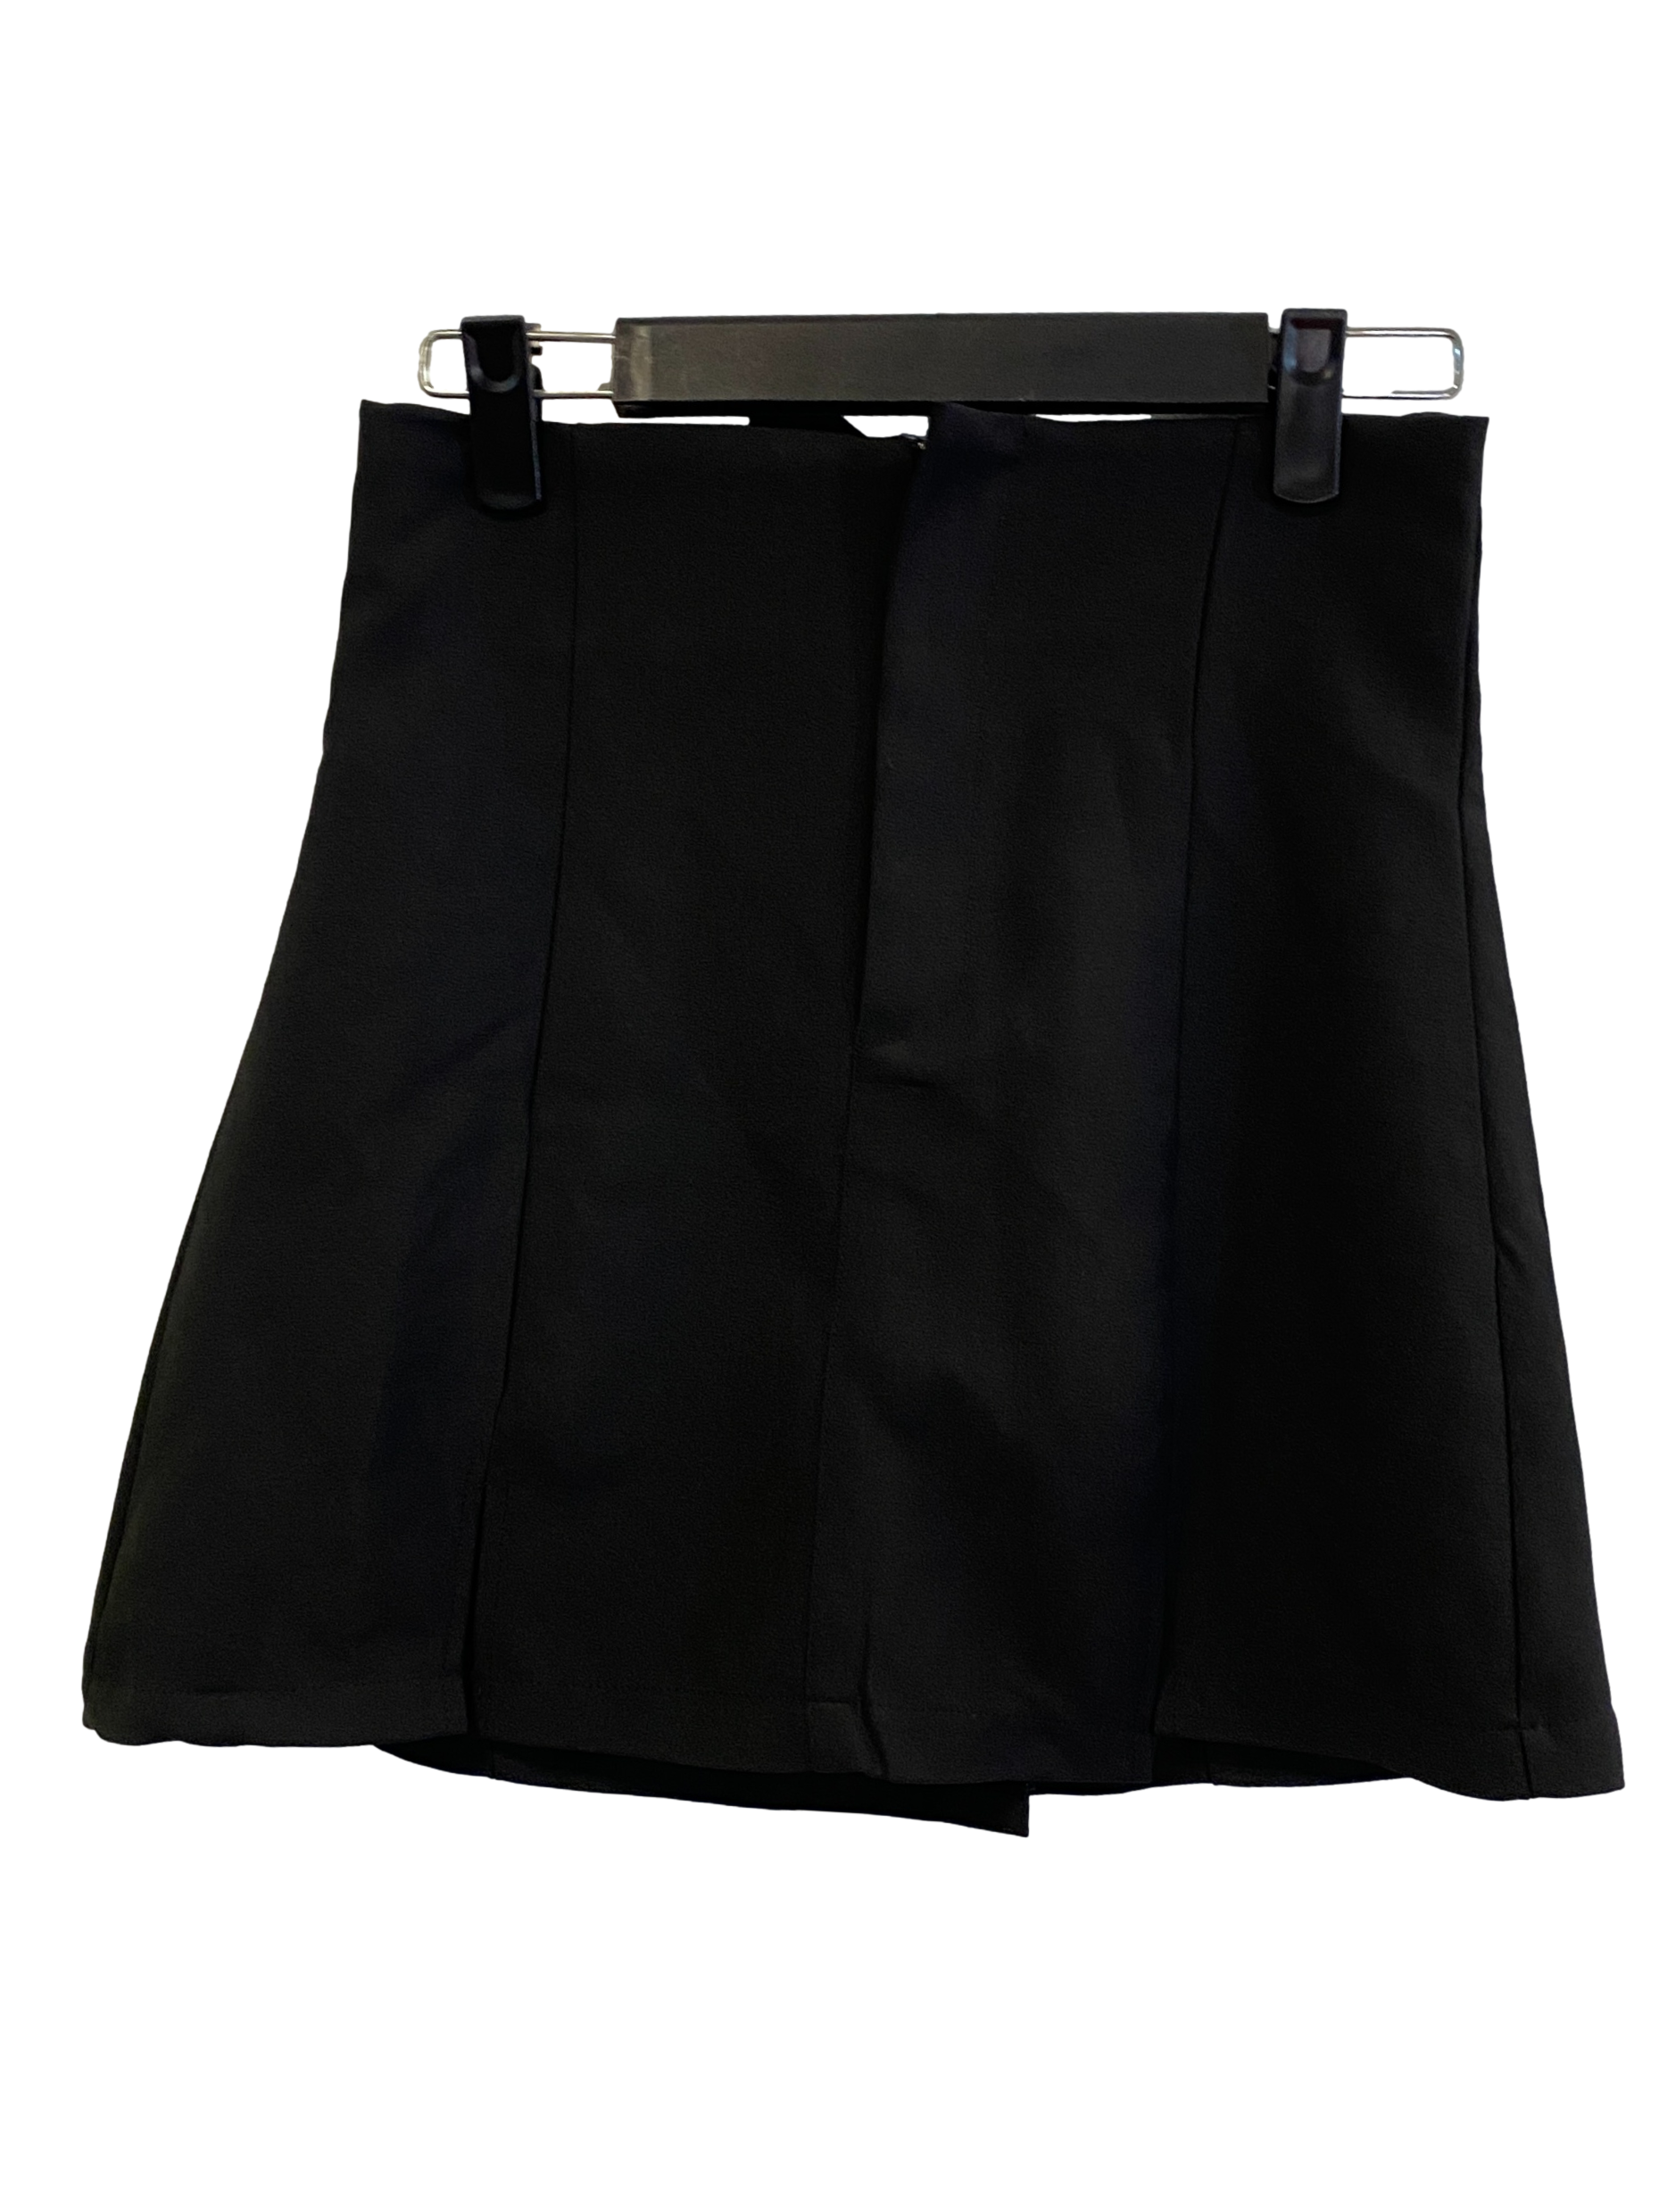 Onyx Black Skirt